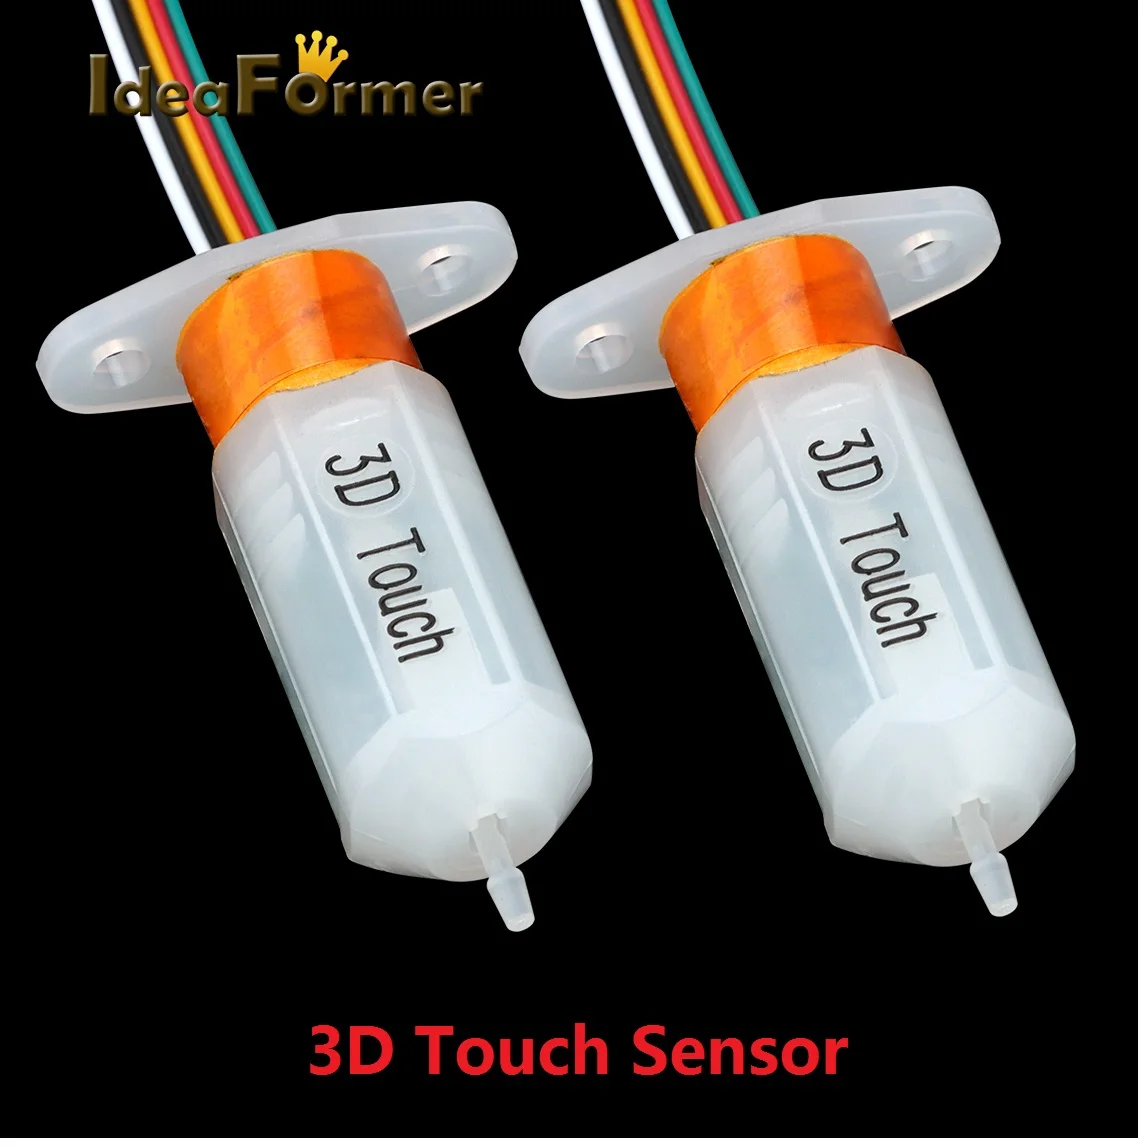 IdeaFormer 3DTouch Sensor Auto Bed Leveling Sensor 3D Printer Parts For CR10 CR10S Ender 3 Pro Anet A8 tevo Reprap mk8 i3 r trianglelab m8 inductive proximity sensor dc5v 3 wire 2mm for 3d printer z probe auto bed leveling cr10 ender3